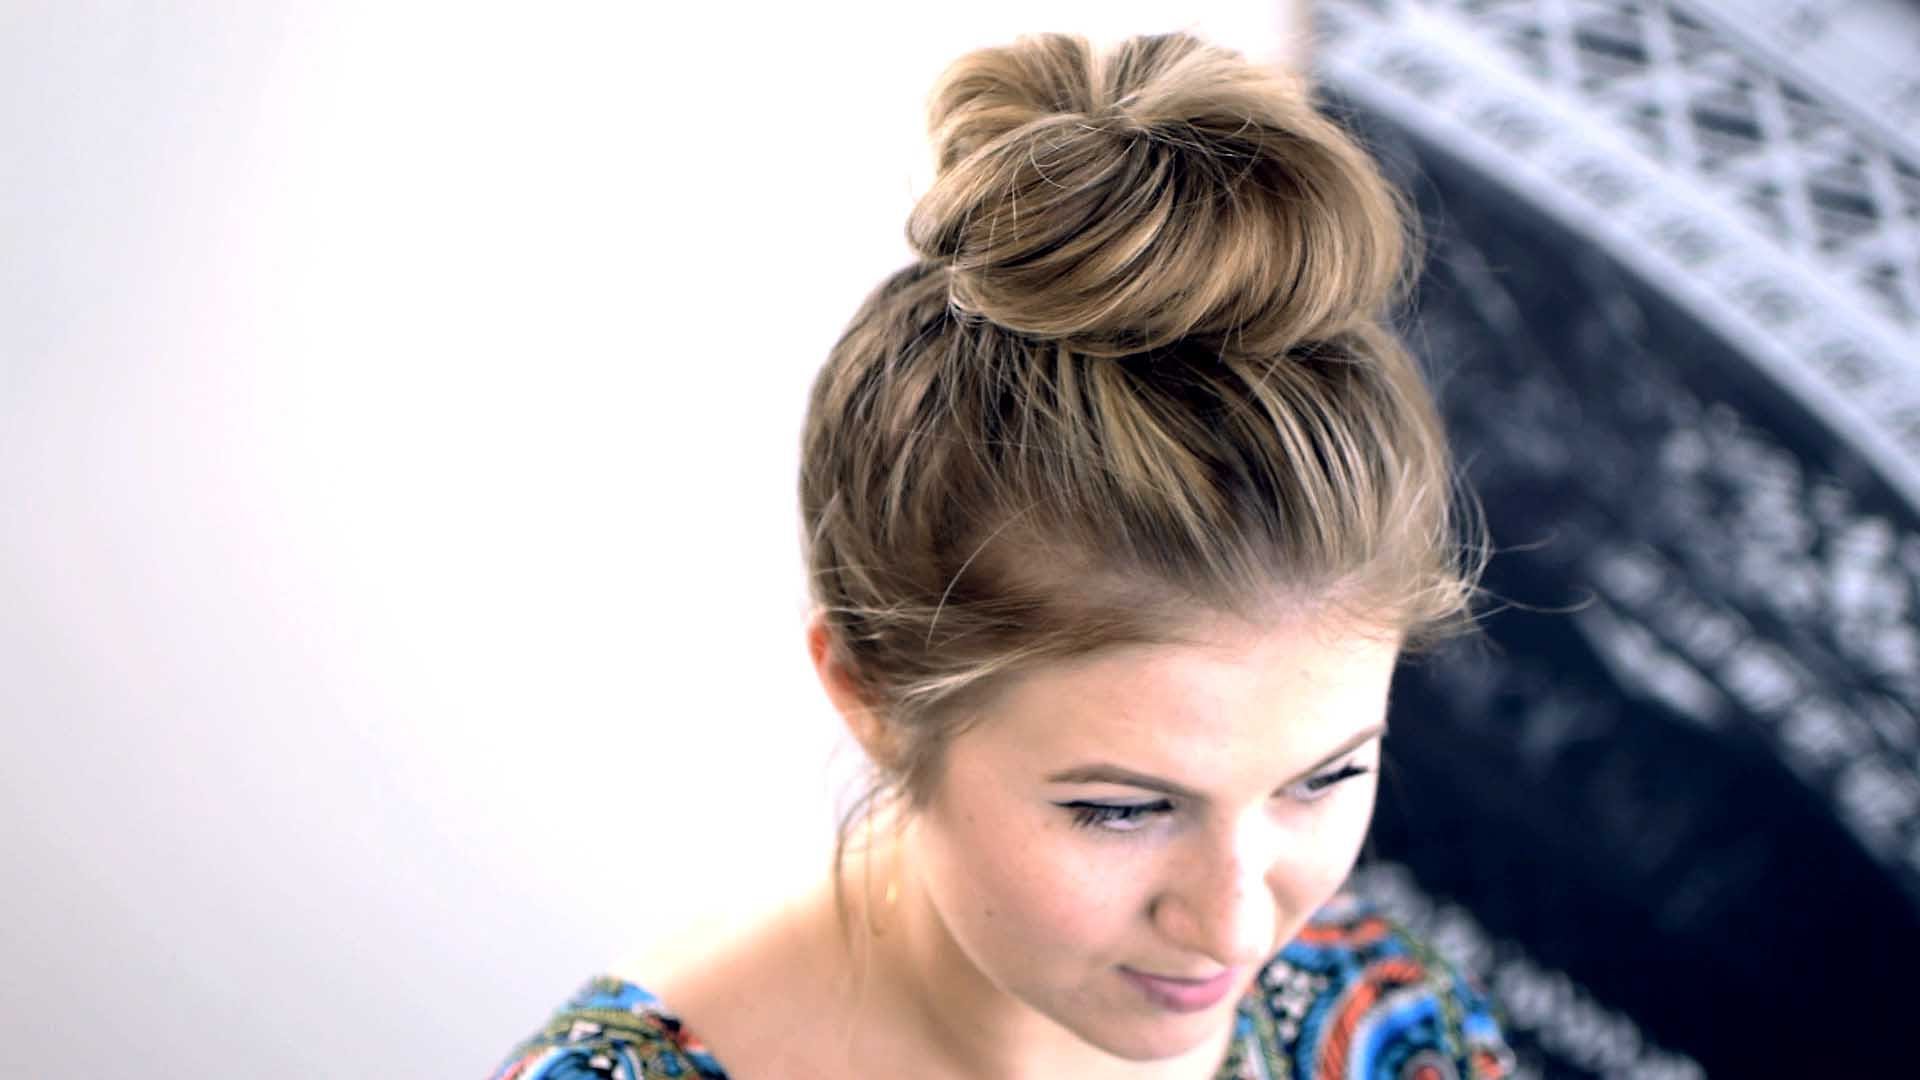 Top knot hair tutorial